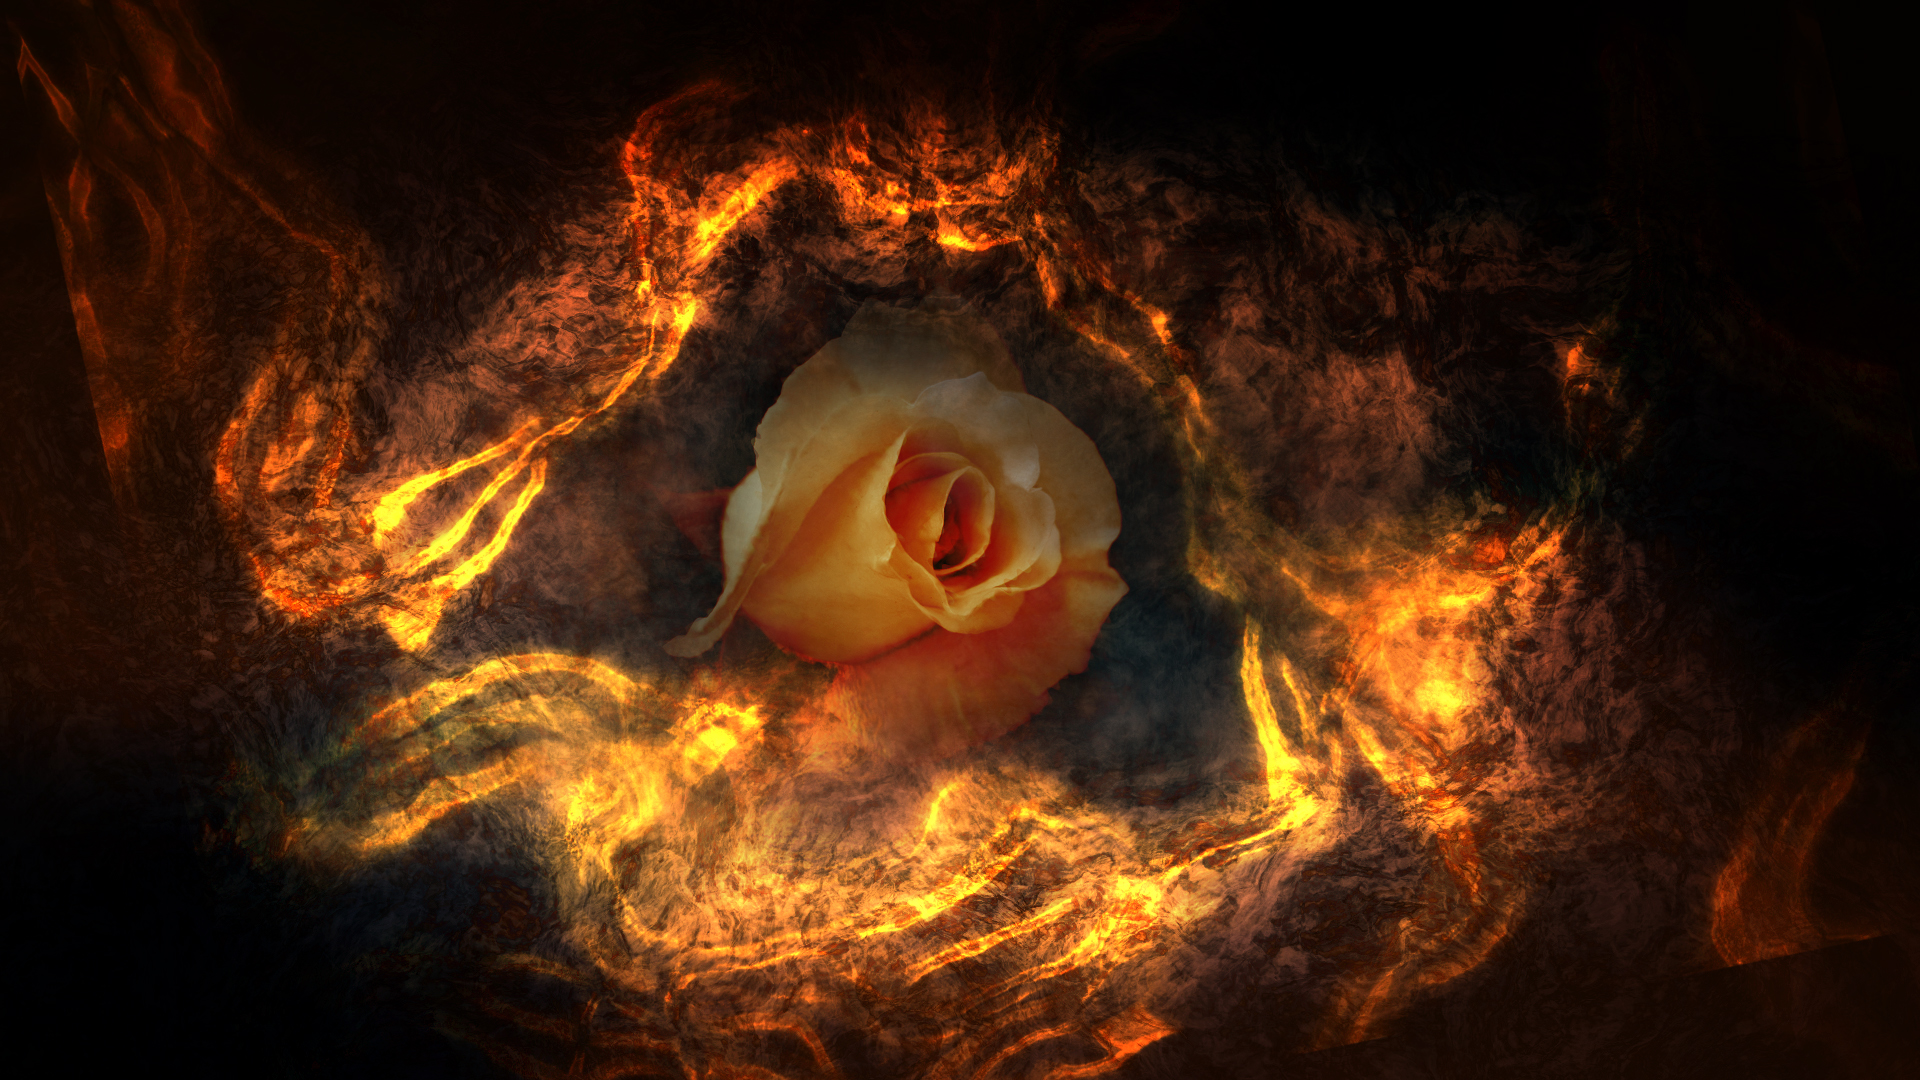 Wallpaper ID 3601  rose flower flame fire 4k free download